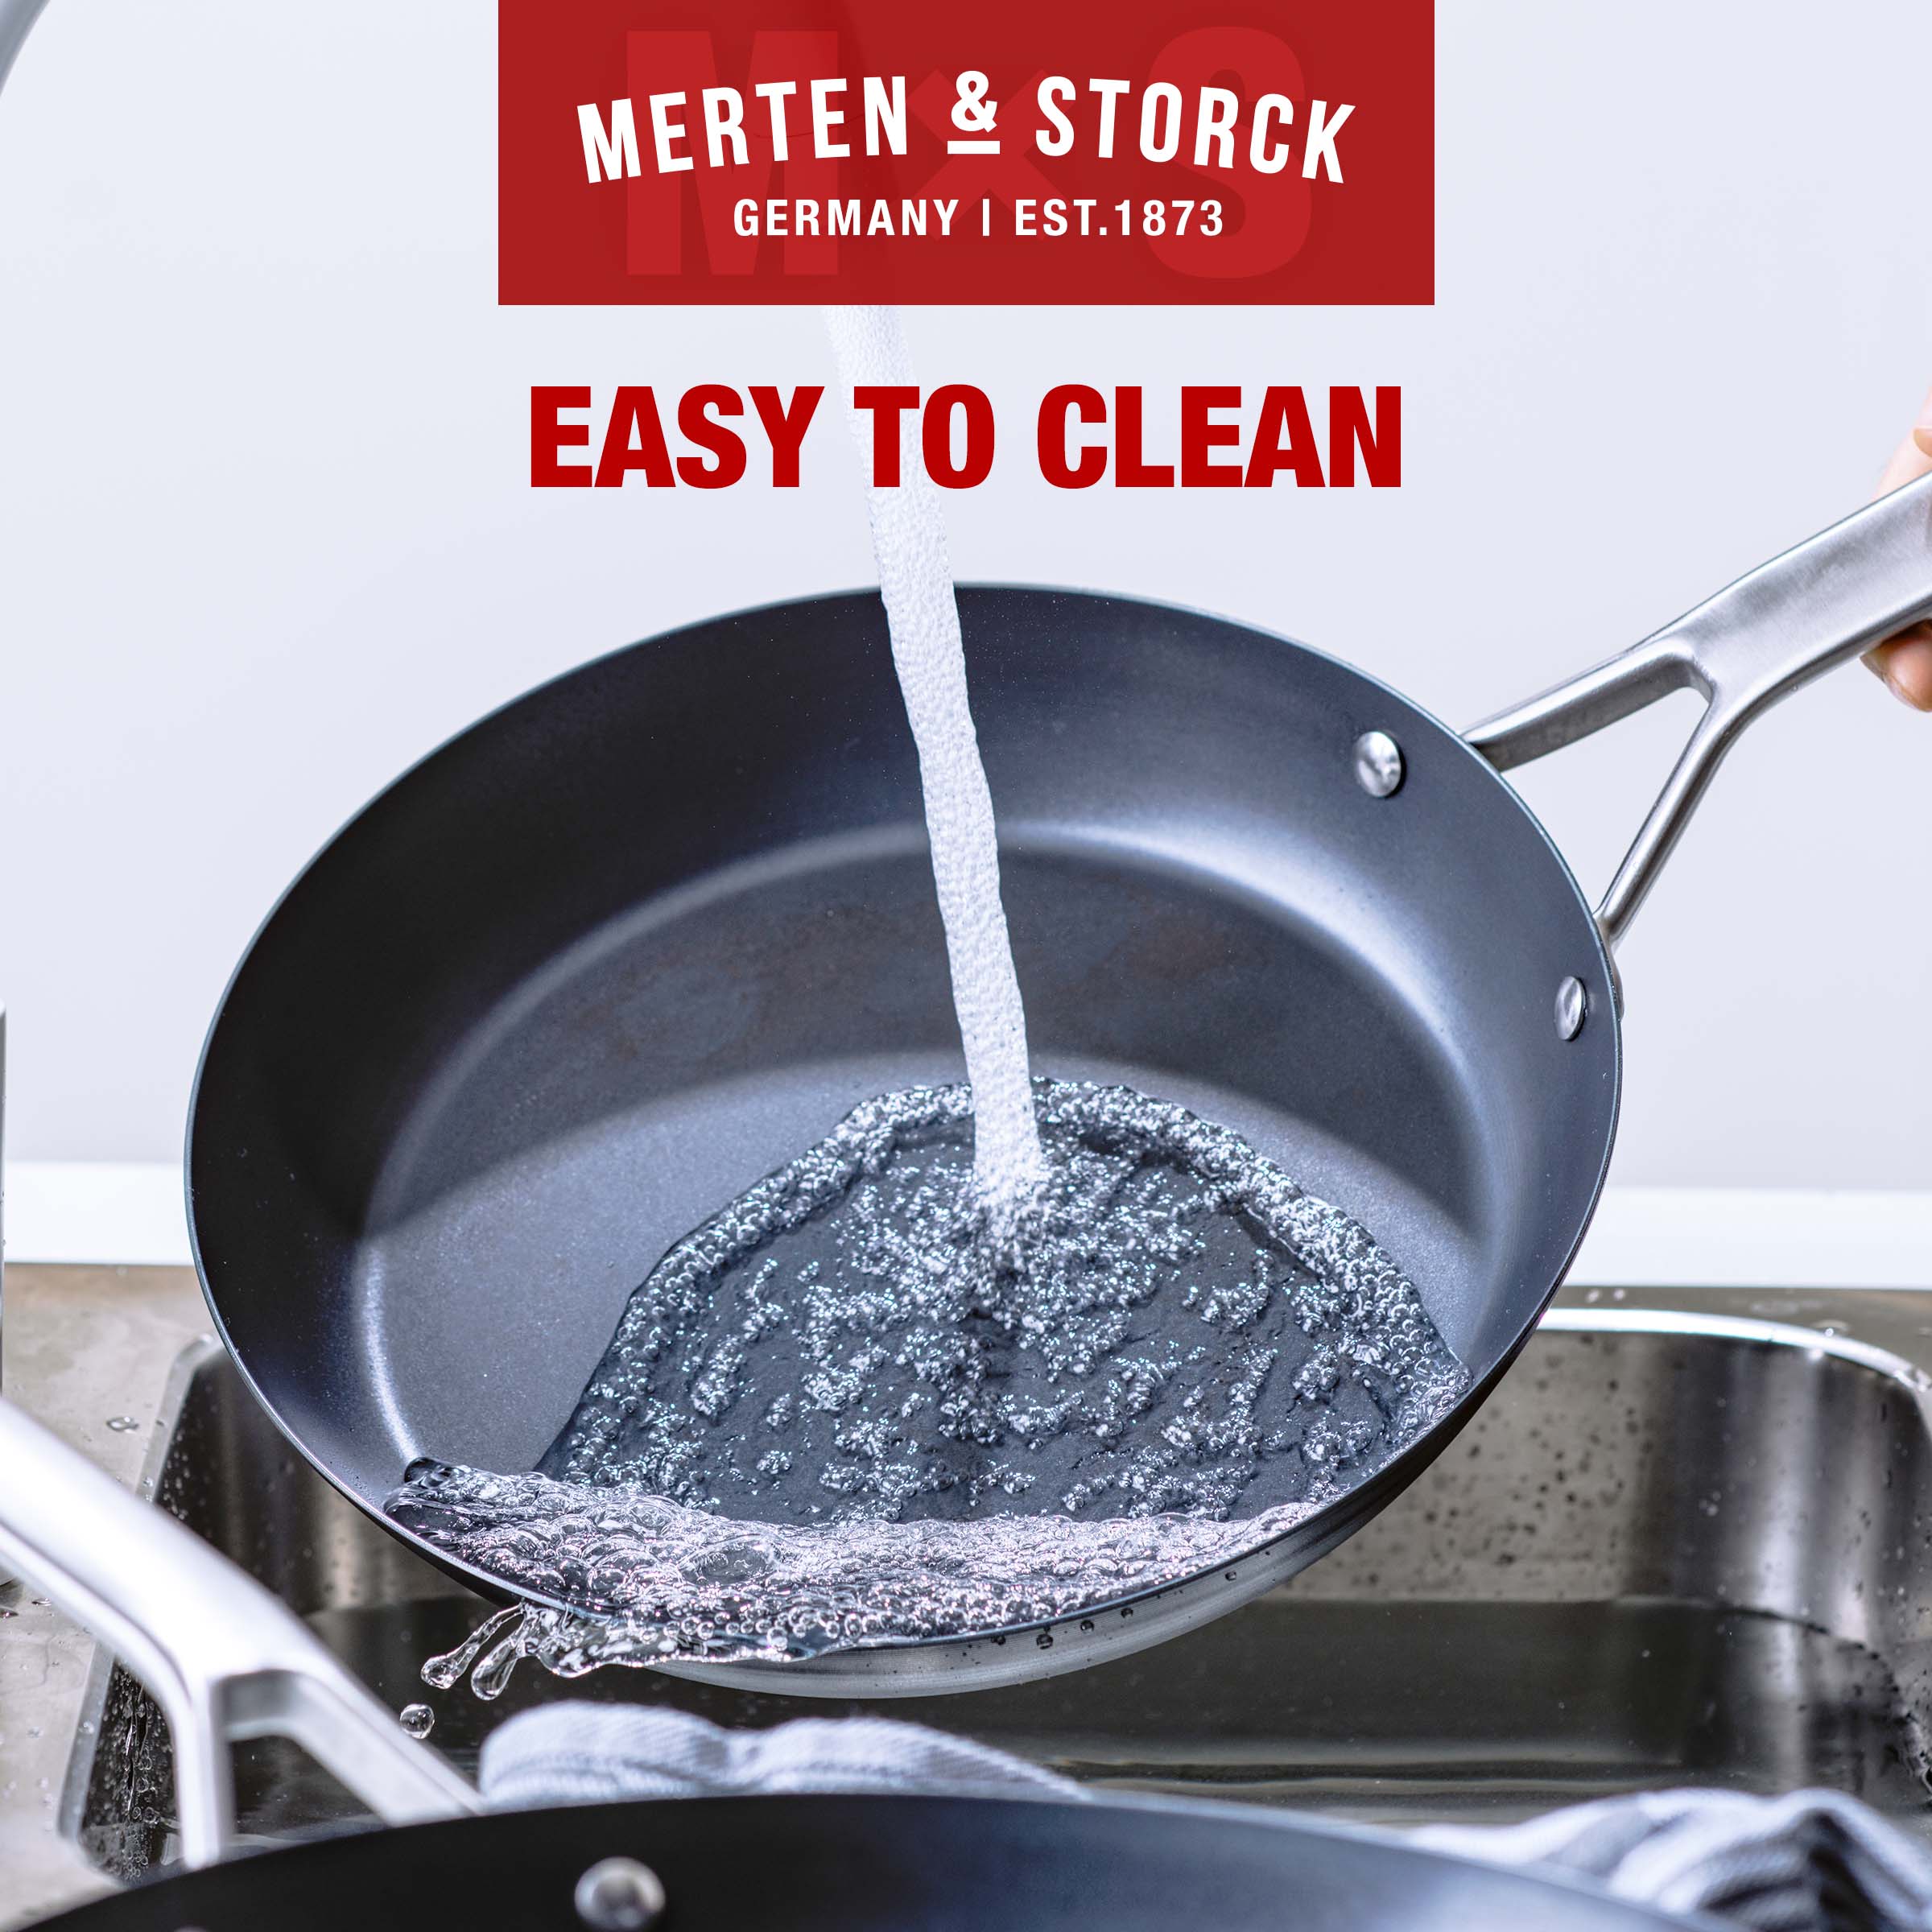 Merten & Storck Pre-Seasoned Carbon Steel Pro Induction 10" Frying Pan Skillet, Black - image 6 of 7